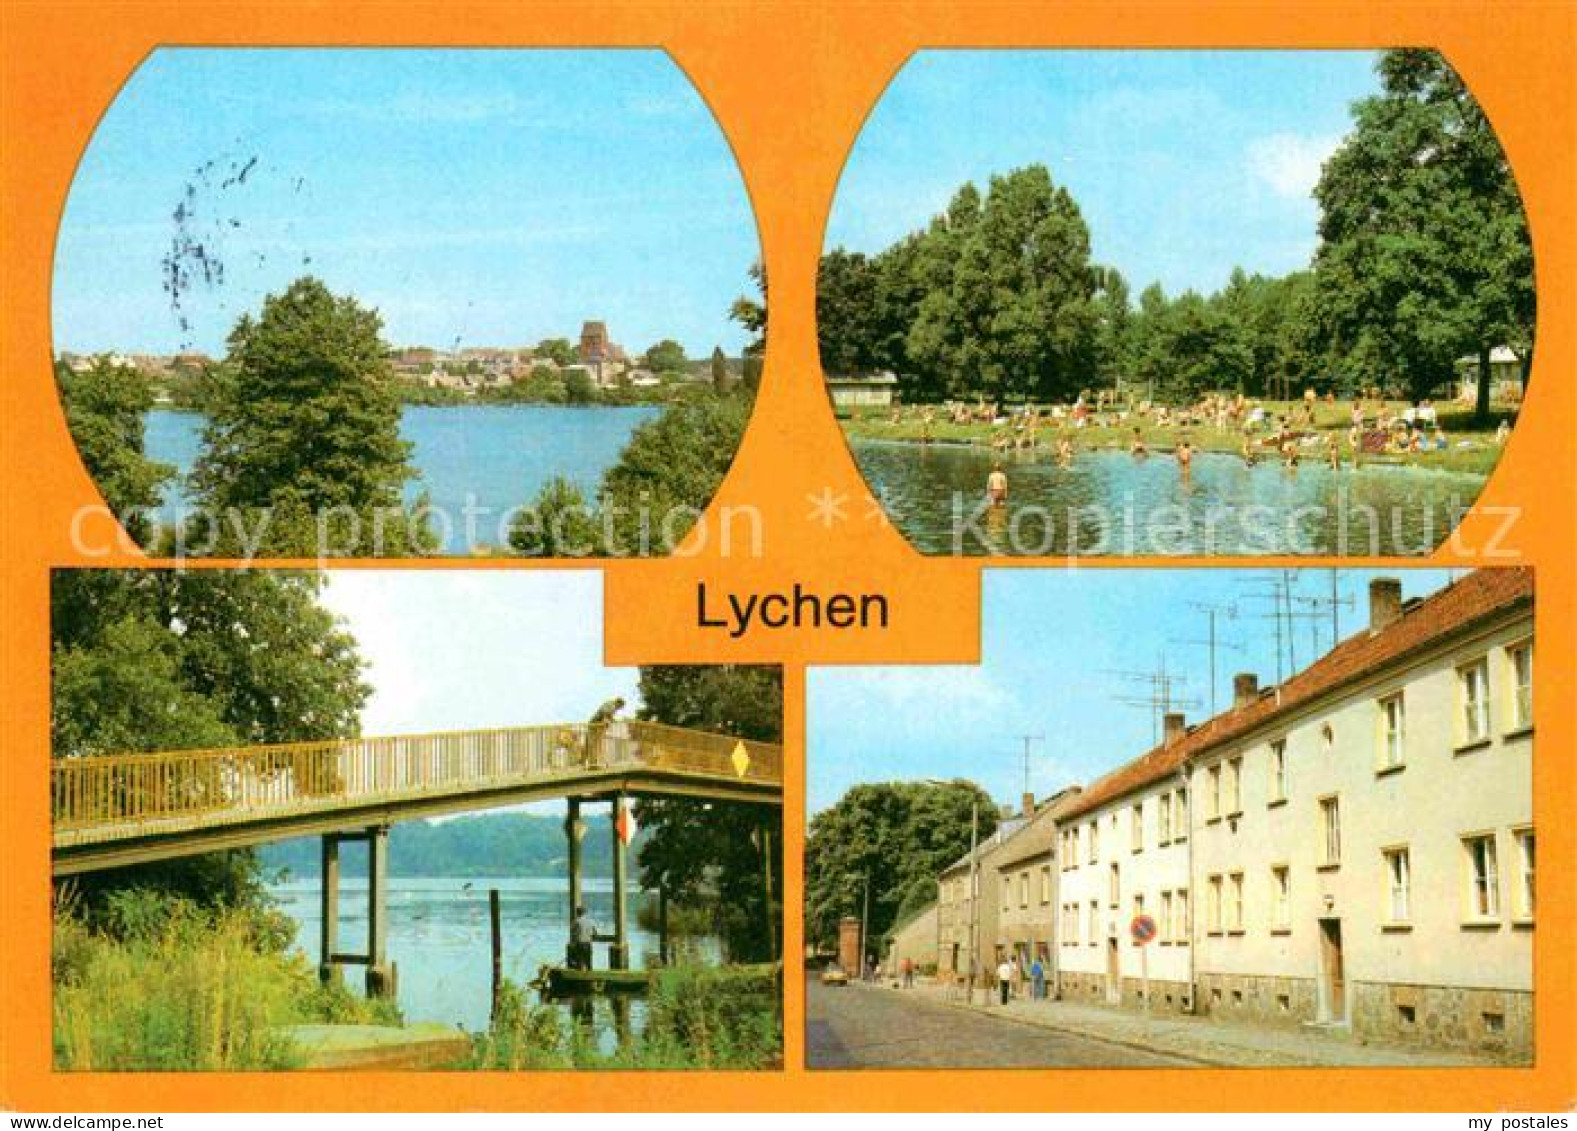 72616329 Lychen Stadtsee Strandbad Grosser Lychensee Fussgaengerbruecke Fuersten - Lychen